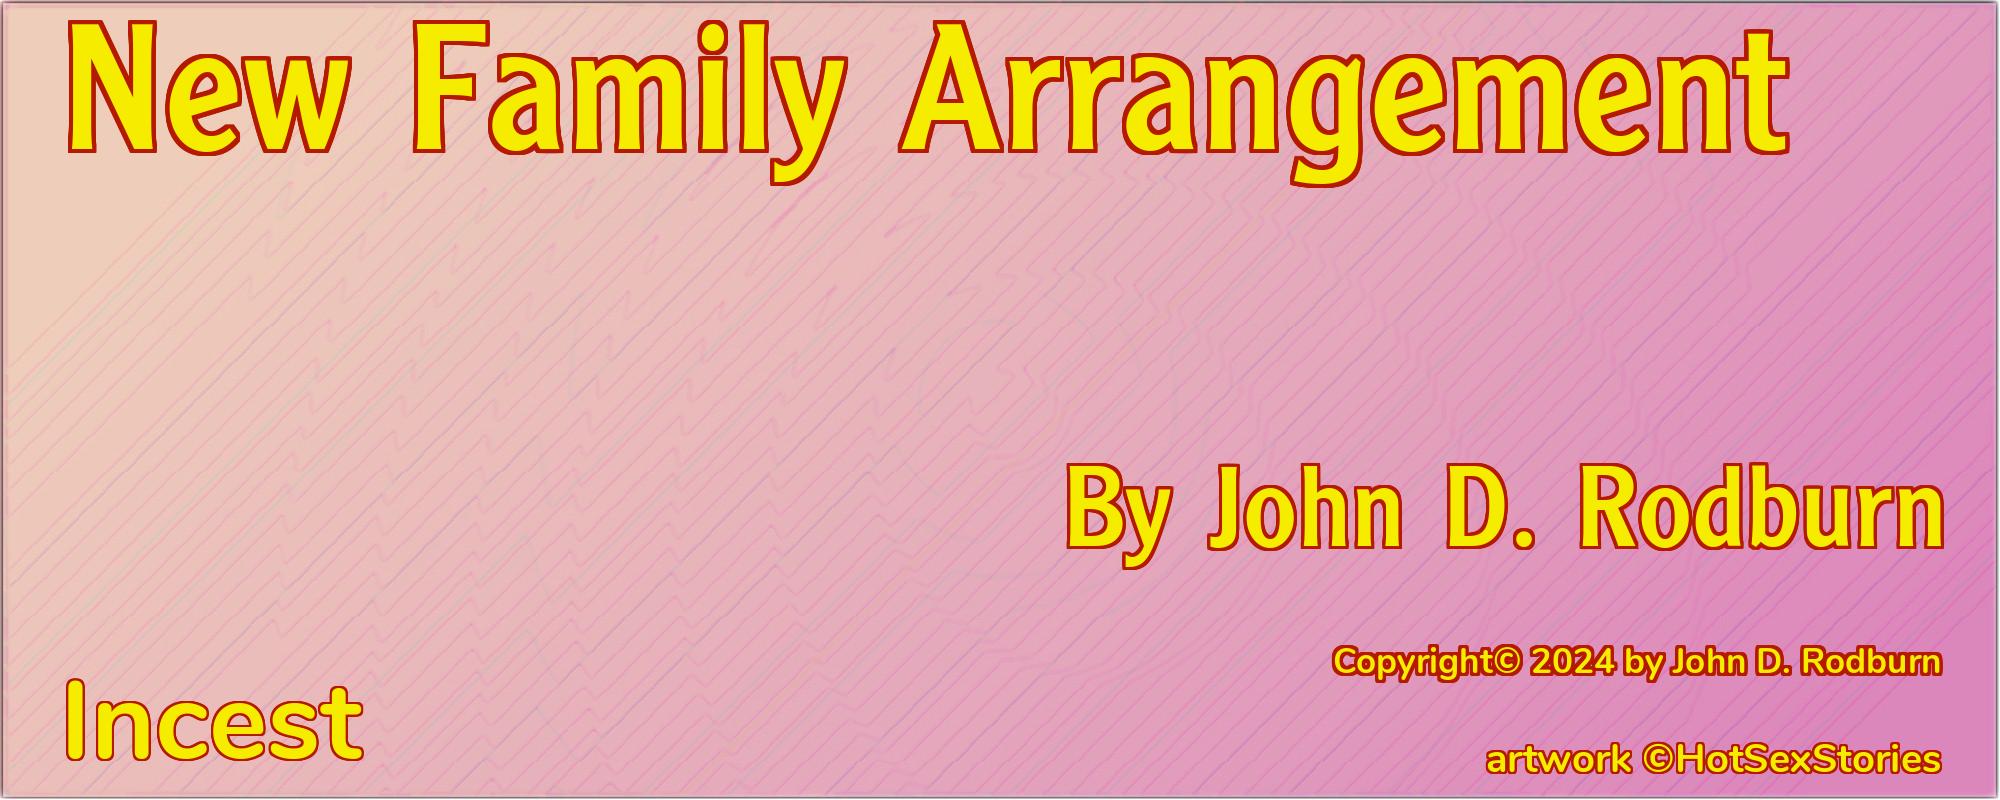 New Family Arrangement - Cover